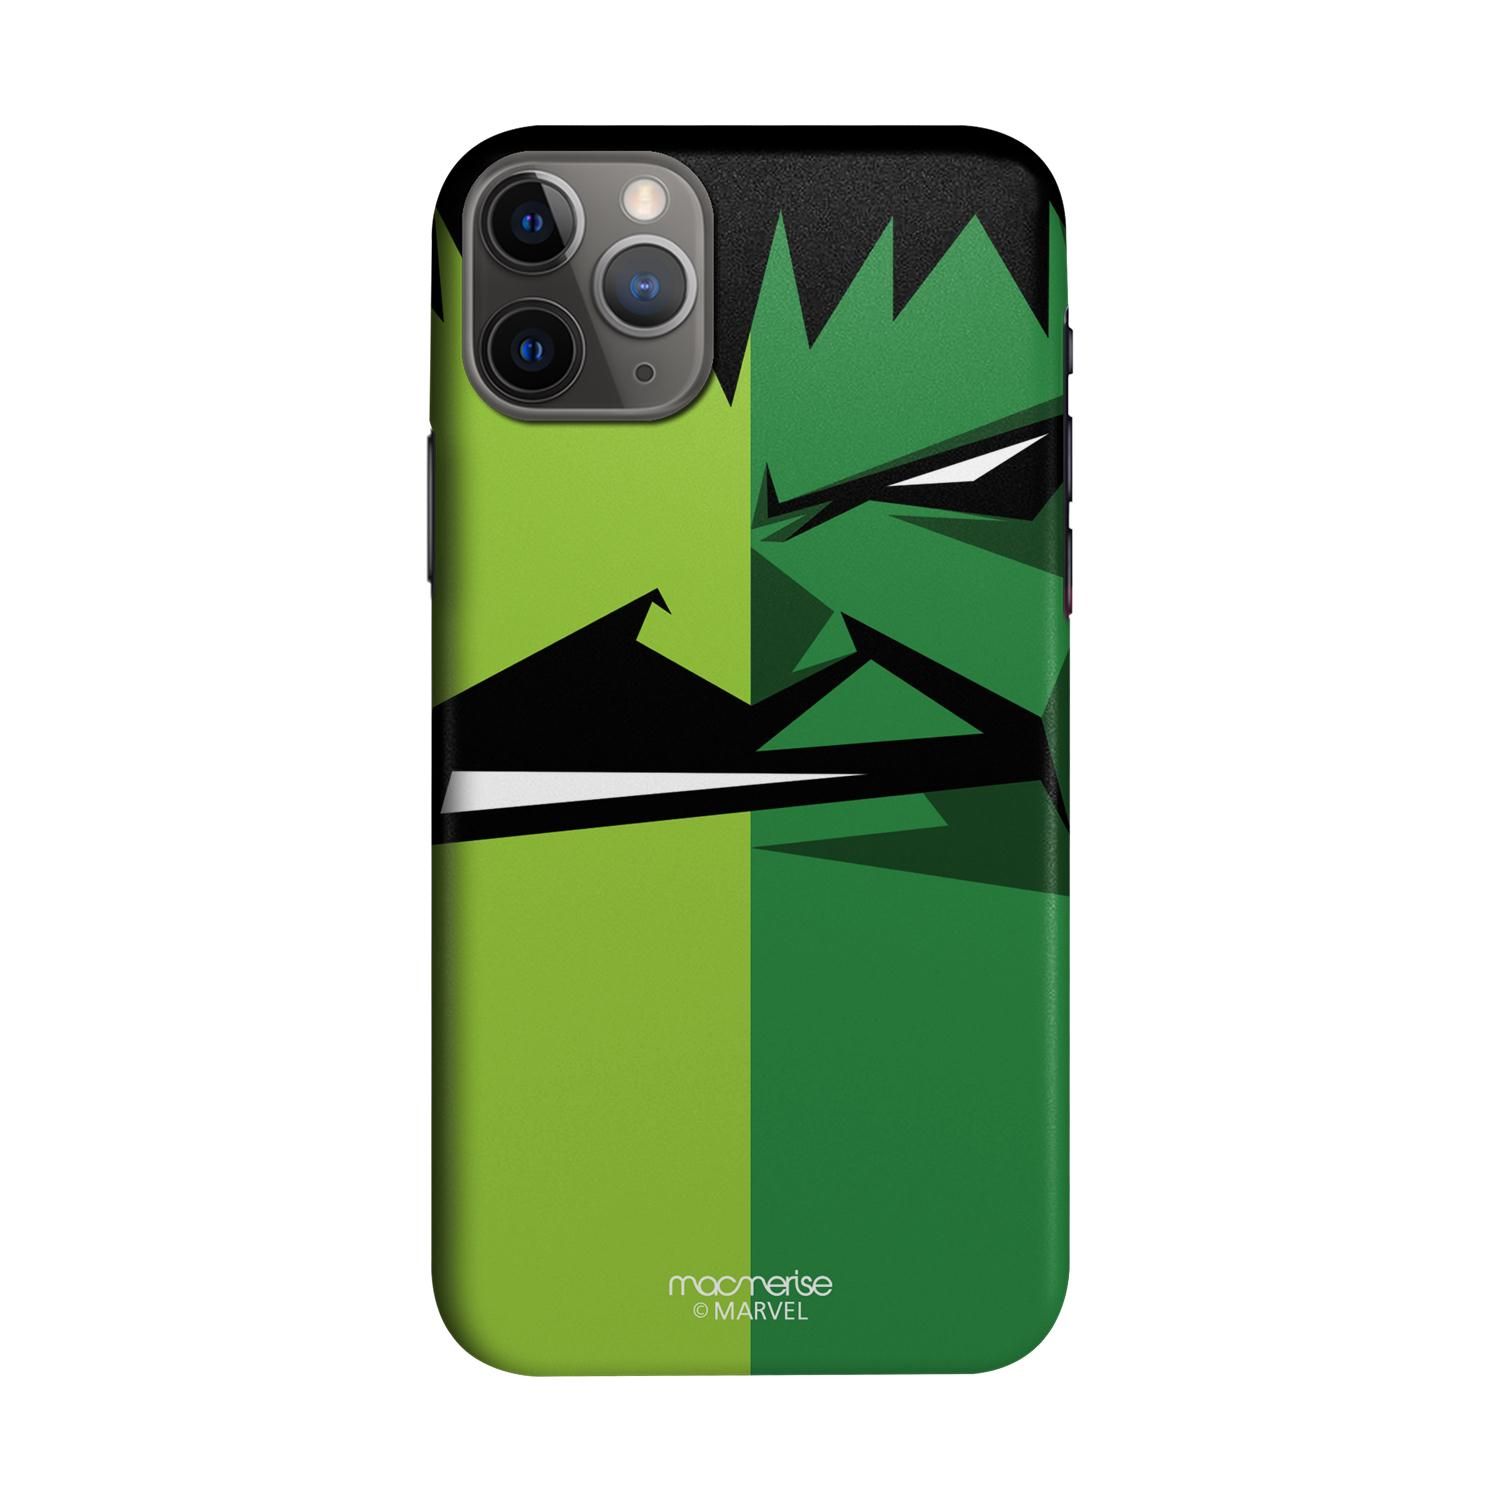 Buy Face Focus Hulk - Sleek Phone Case for iPhone 11 Pro Max Online